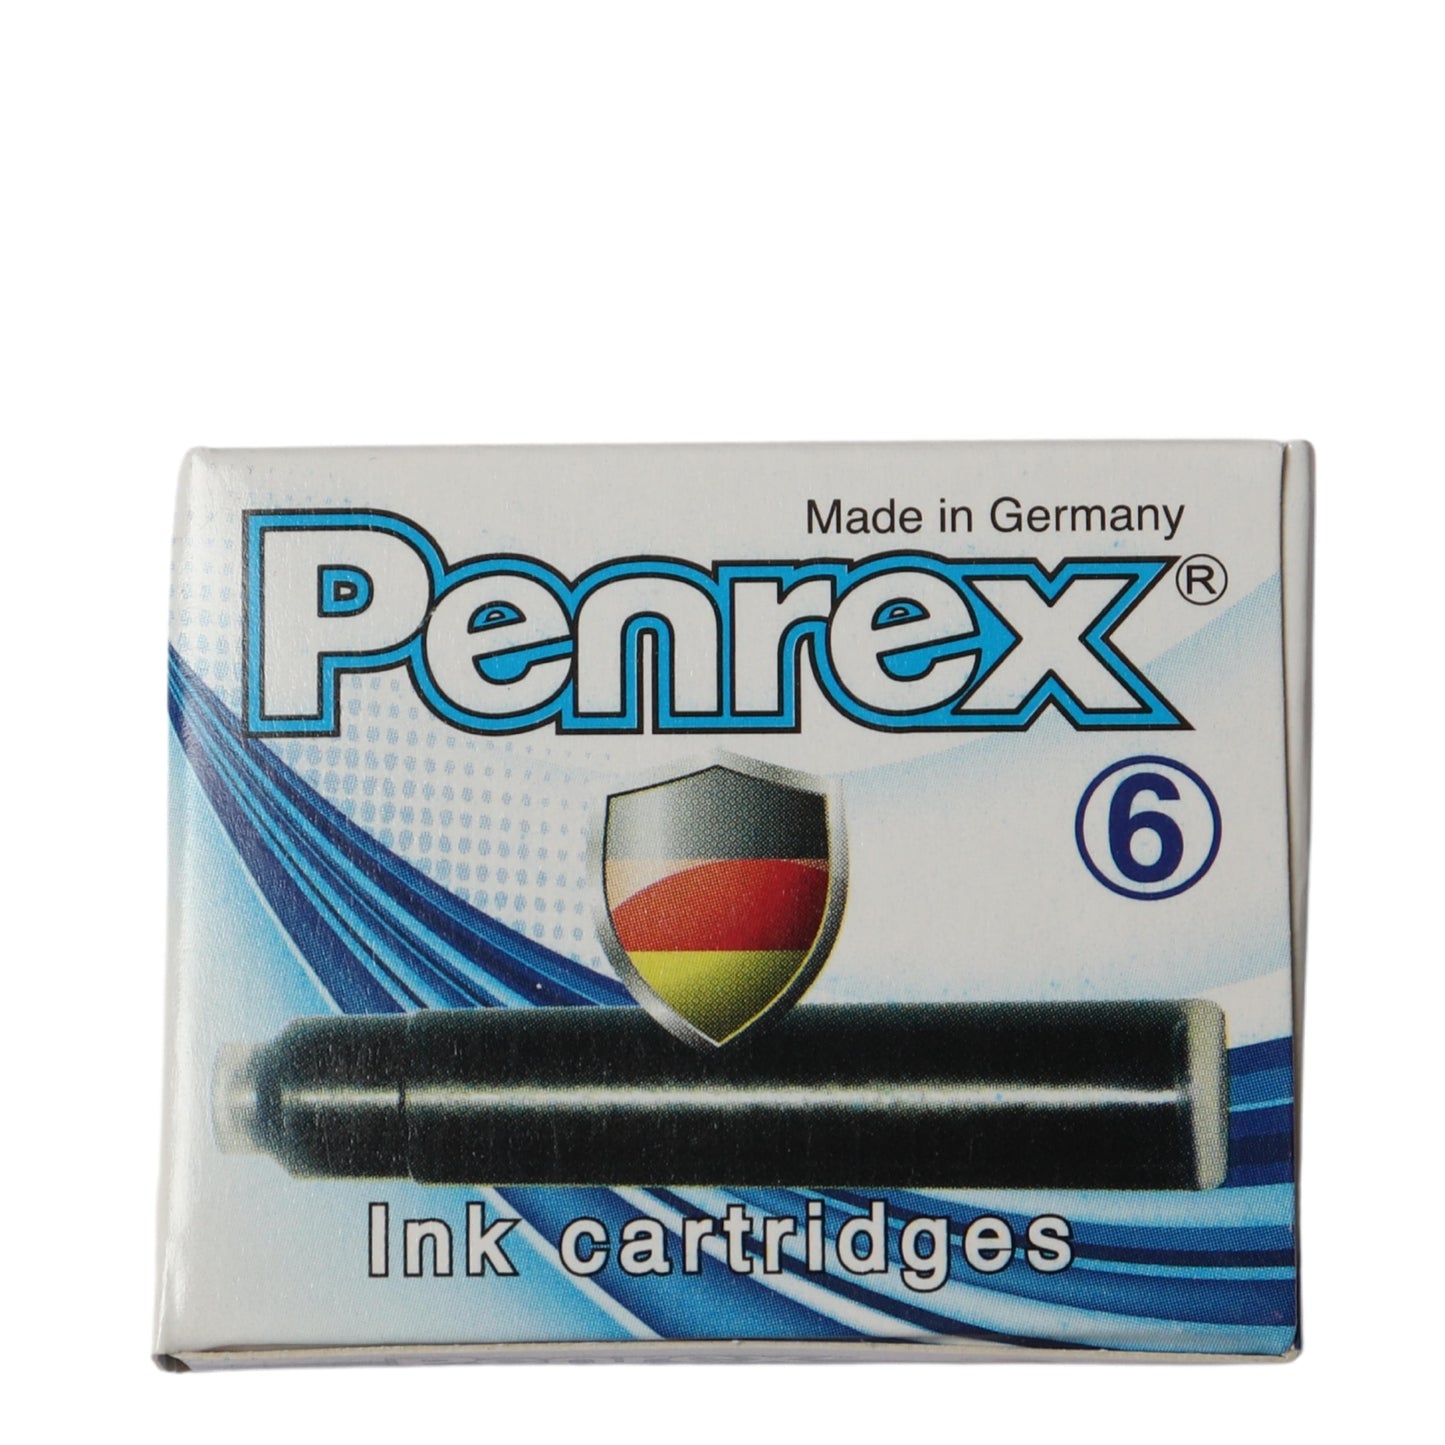 PENREX School Bags & Supplies PENREX - Ink